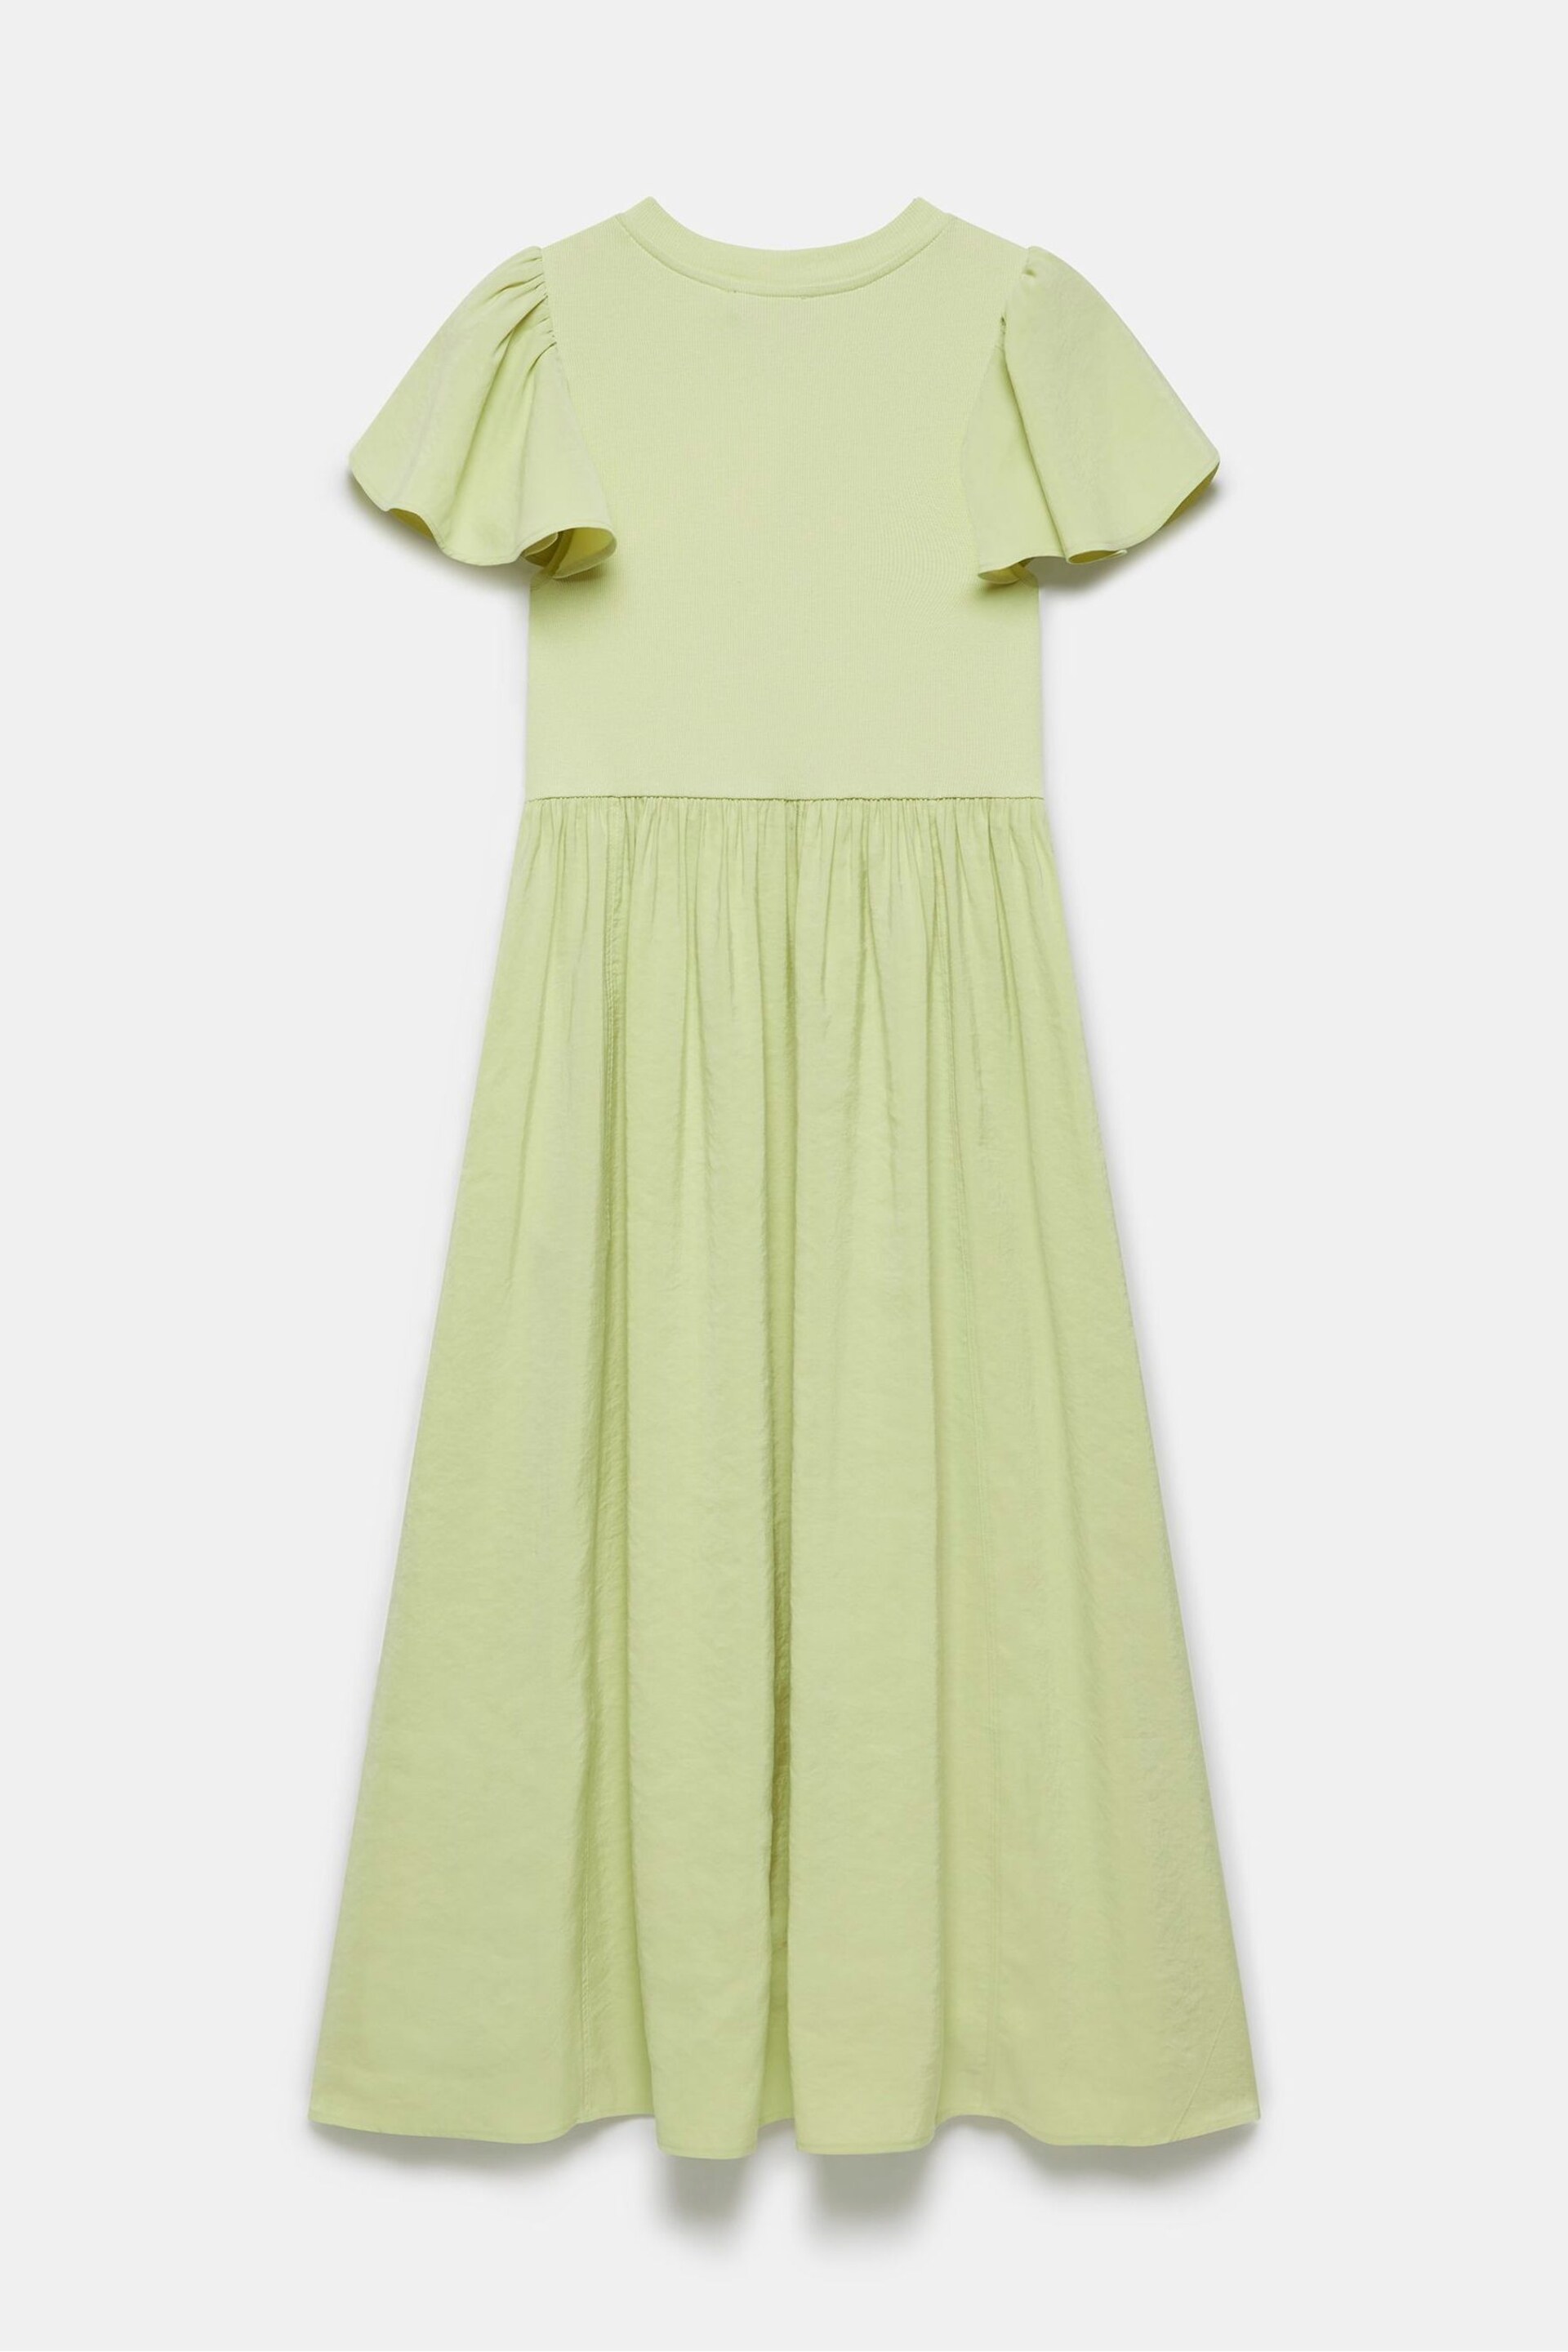 Mint Velvet Green Jersey Ruffle Midi Dress - Image 4 of 4